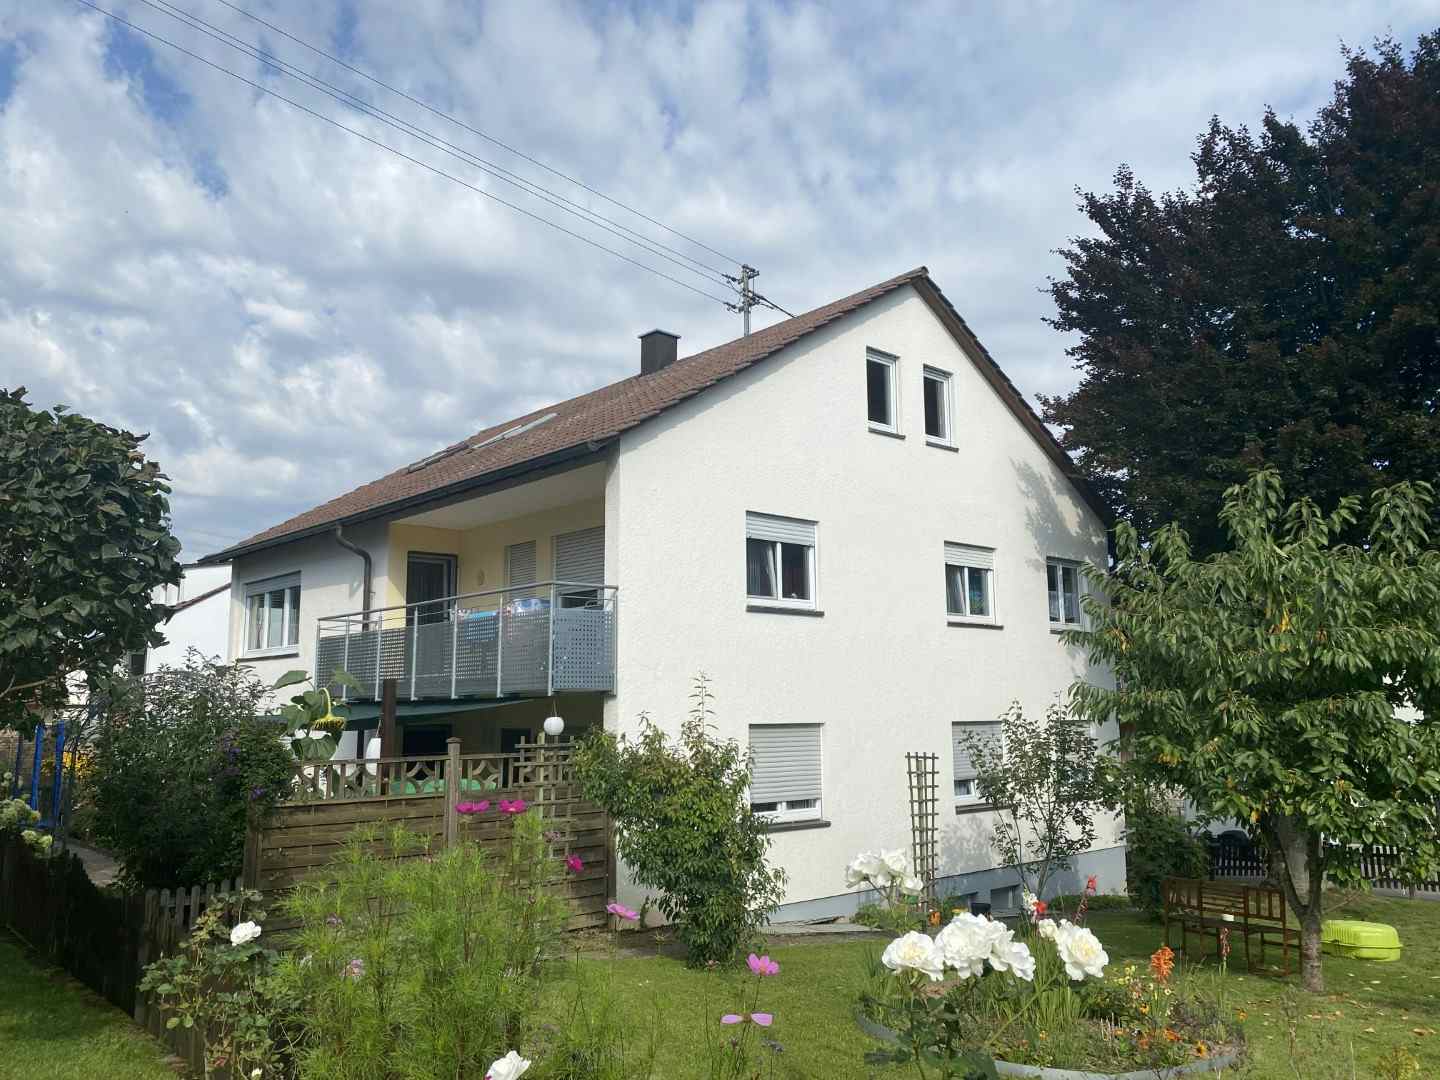 Sehr gepflegtes Mehrfamilienhaus in Kirchberg